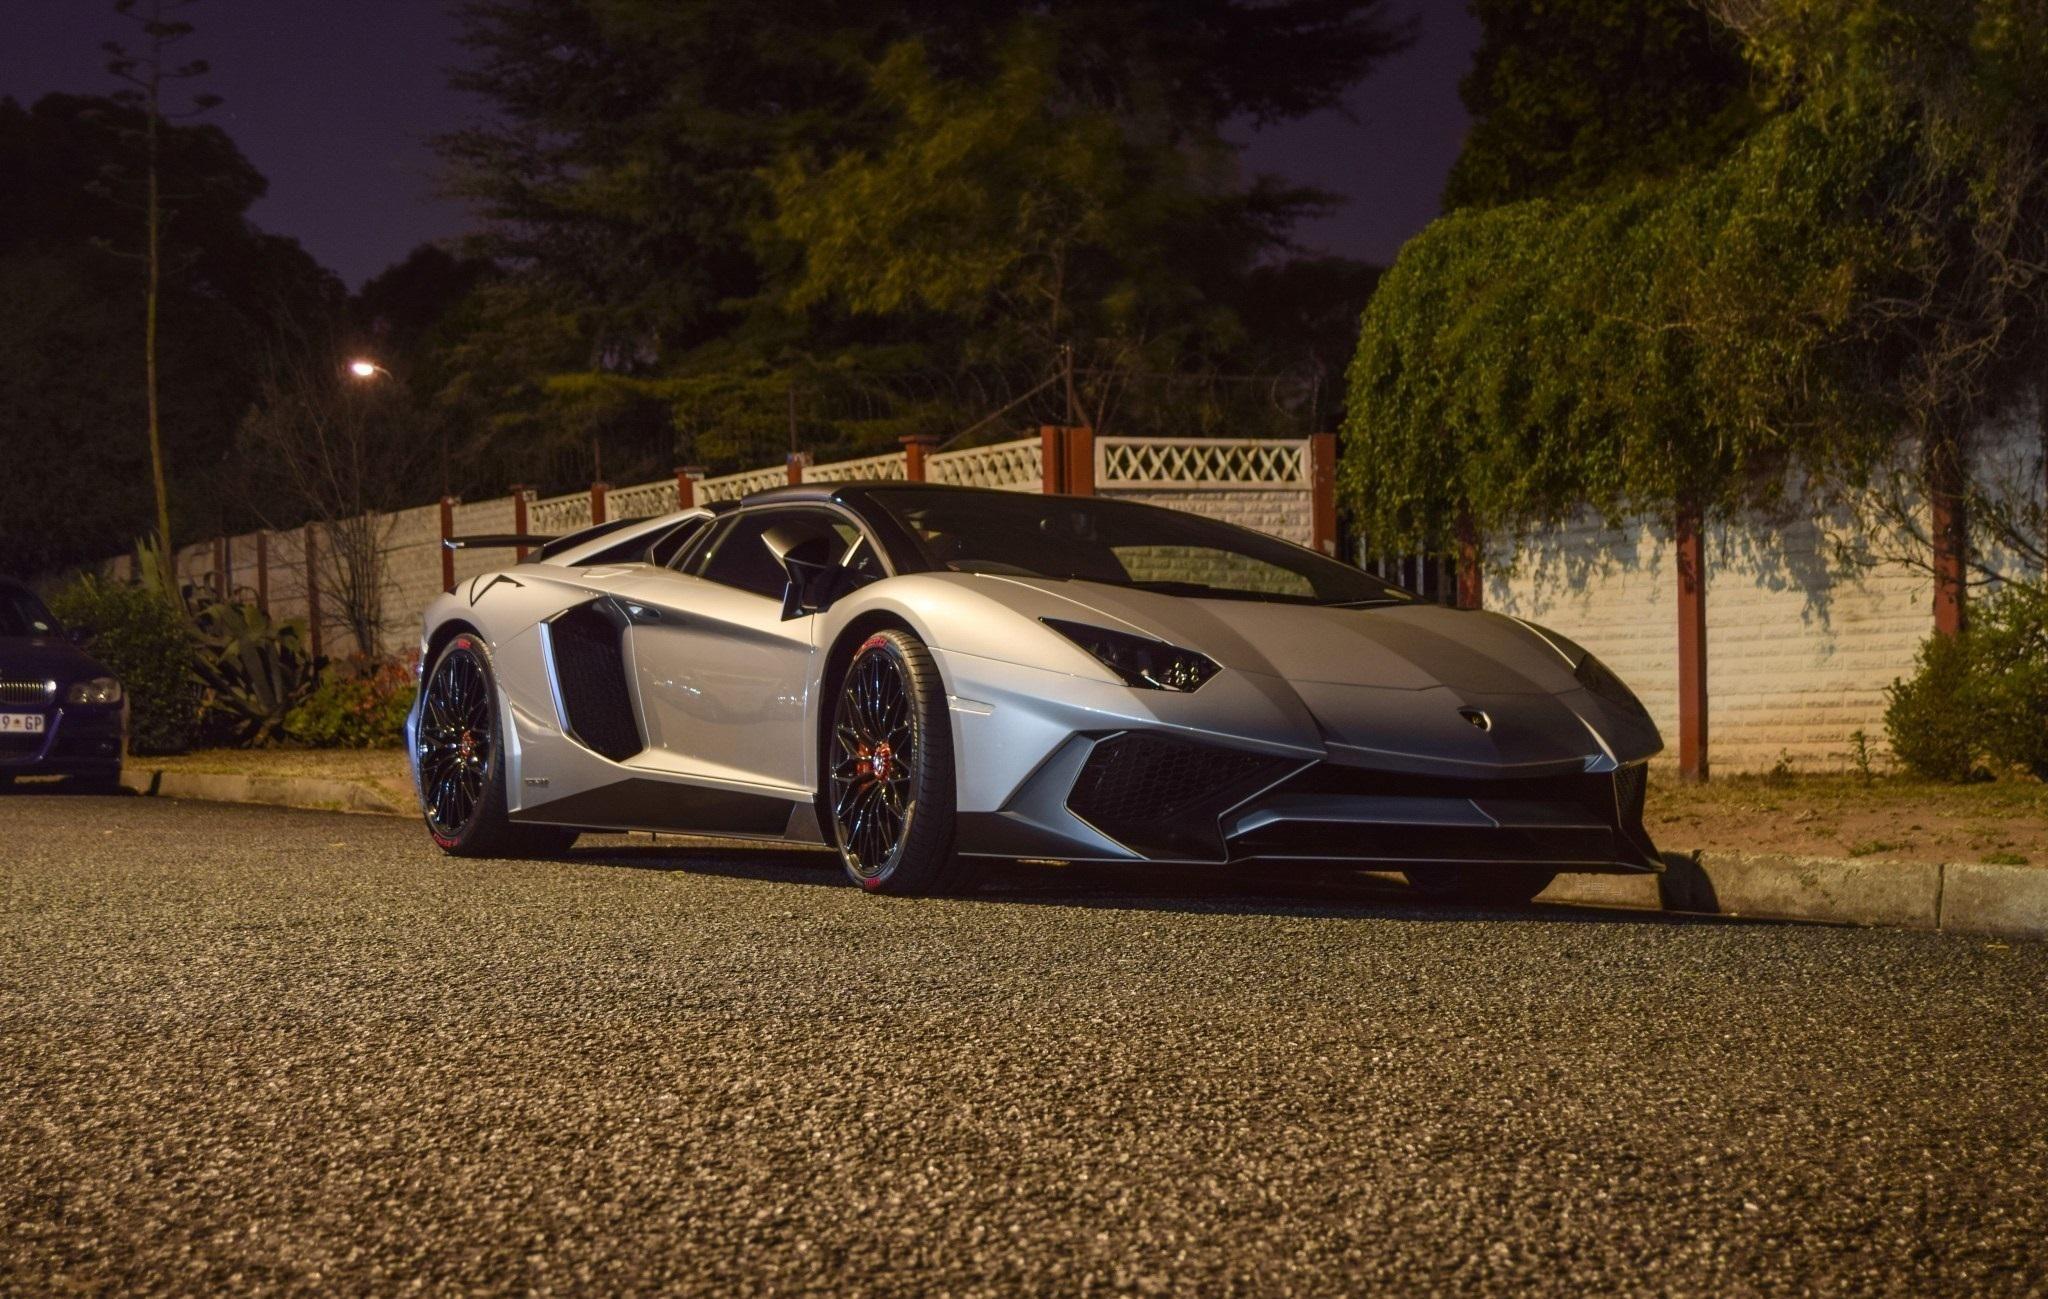 Lamborghini Aventador SV looks crazy at night